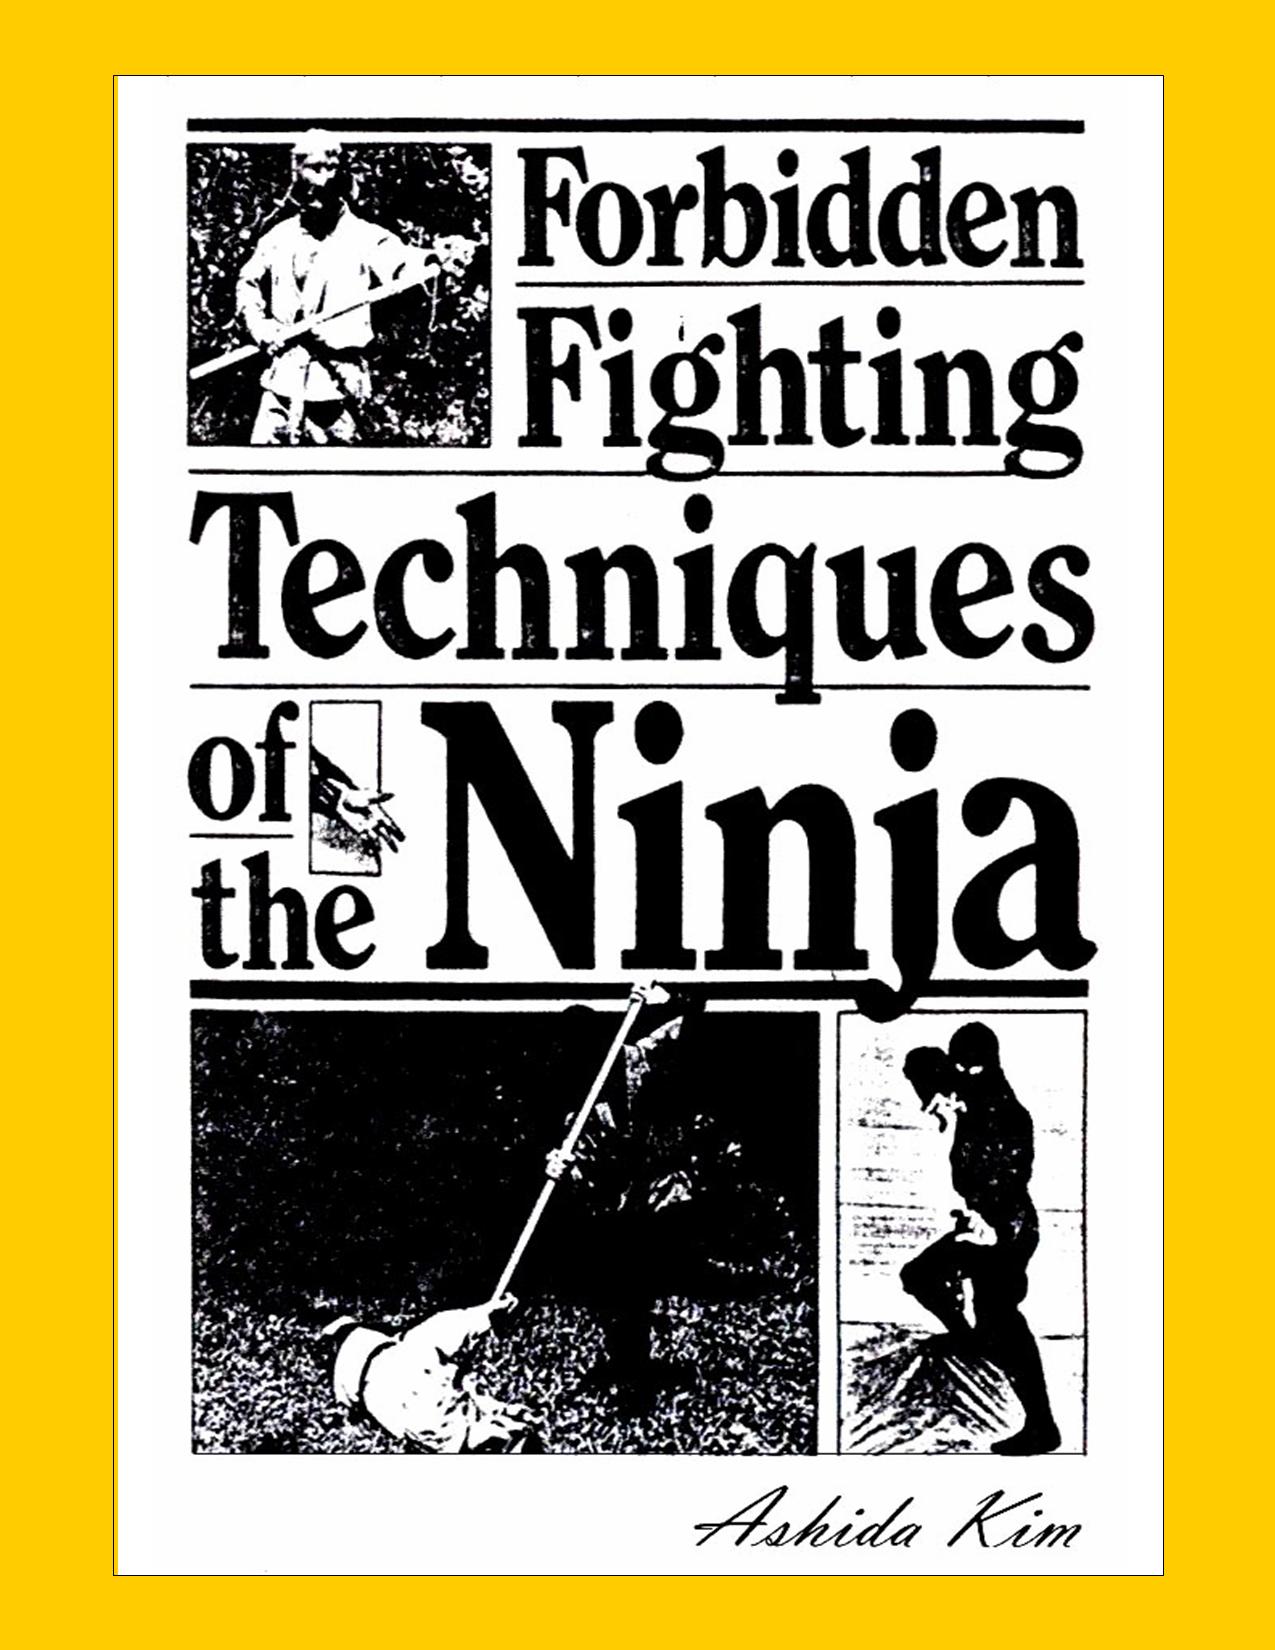 FORBIDDEN FIGHTING TECHNIQUES OF THE NINJA